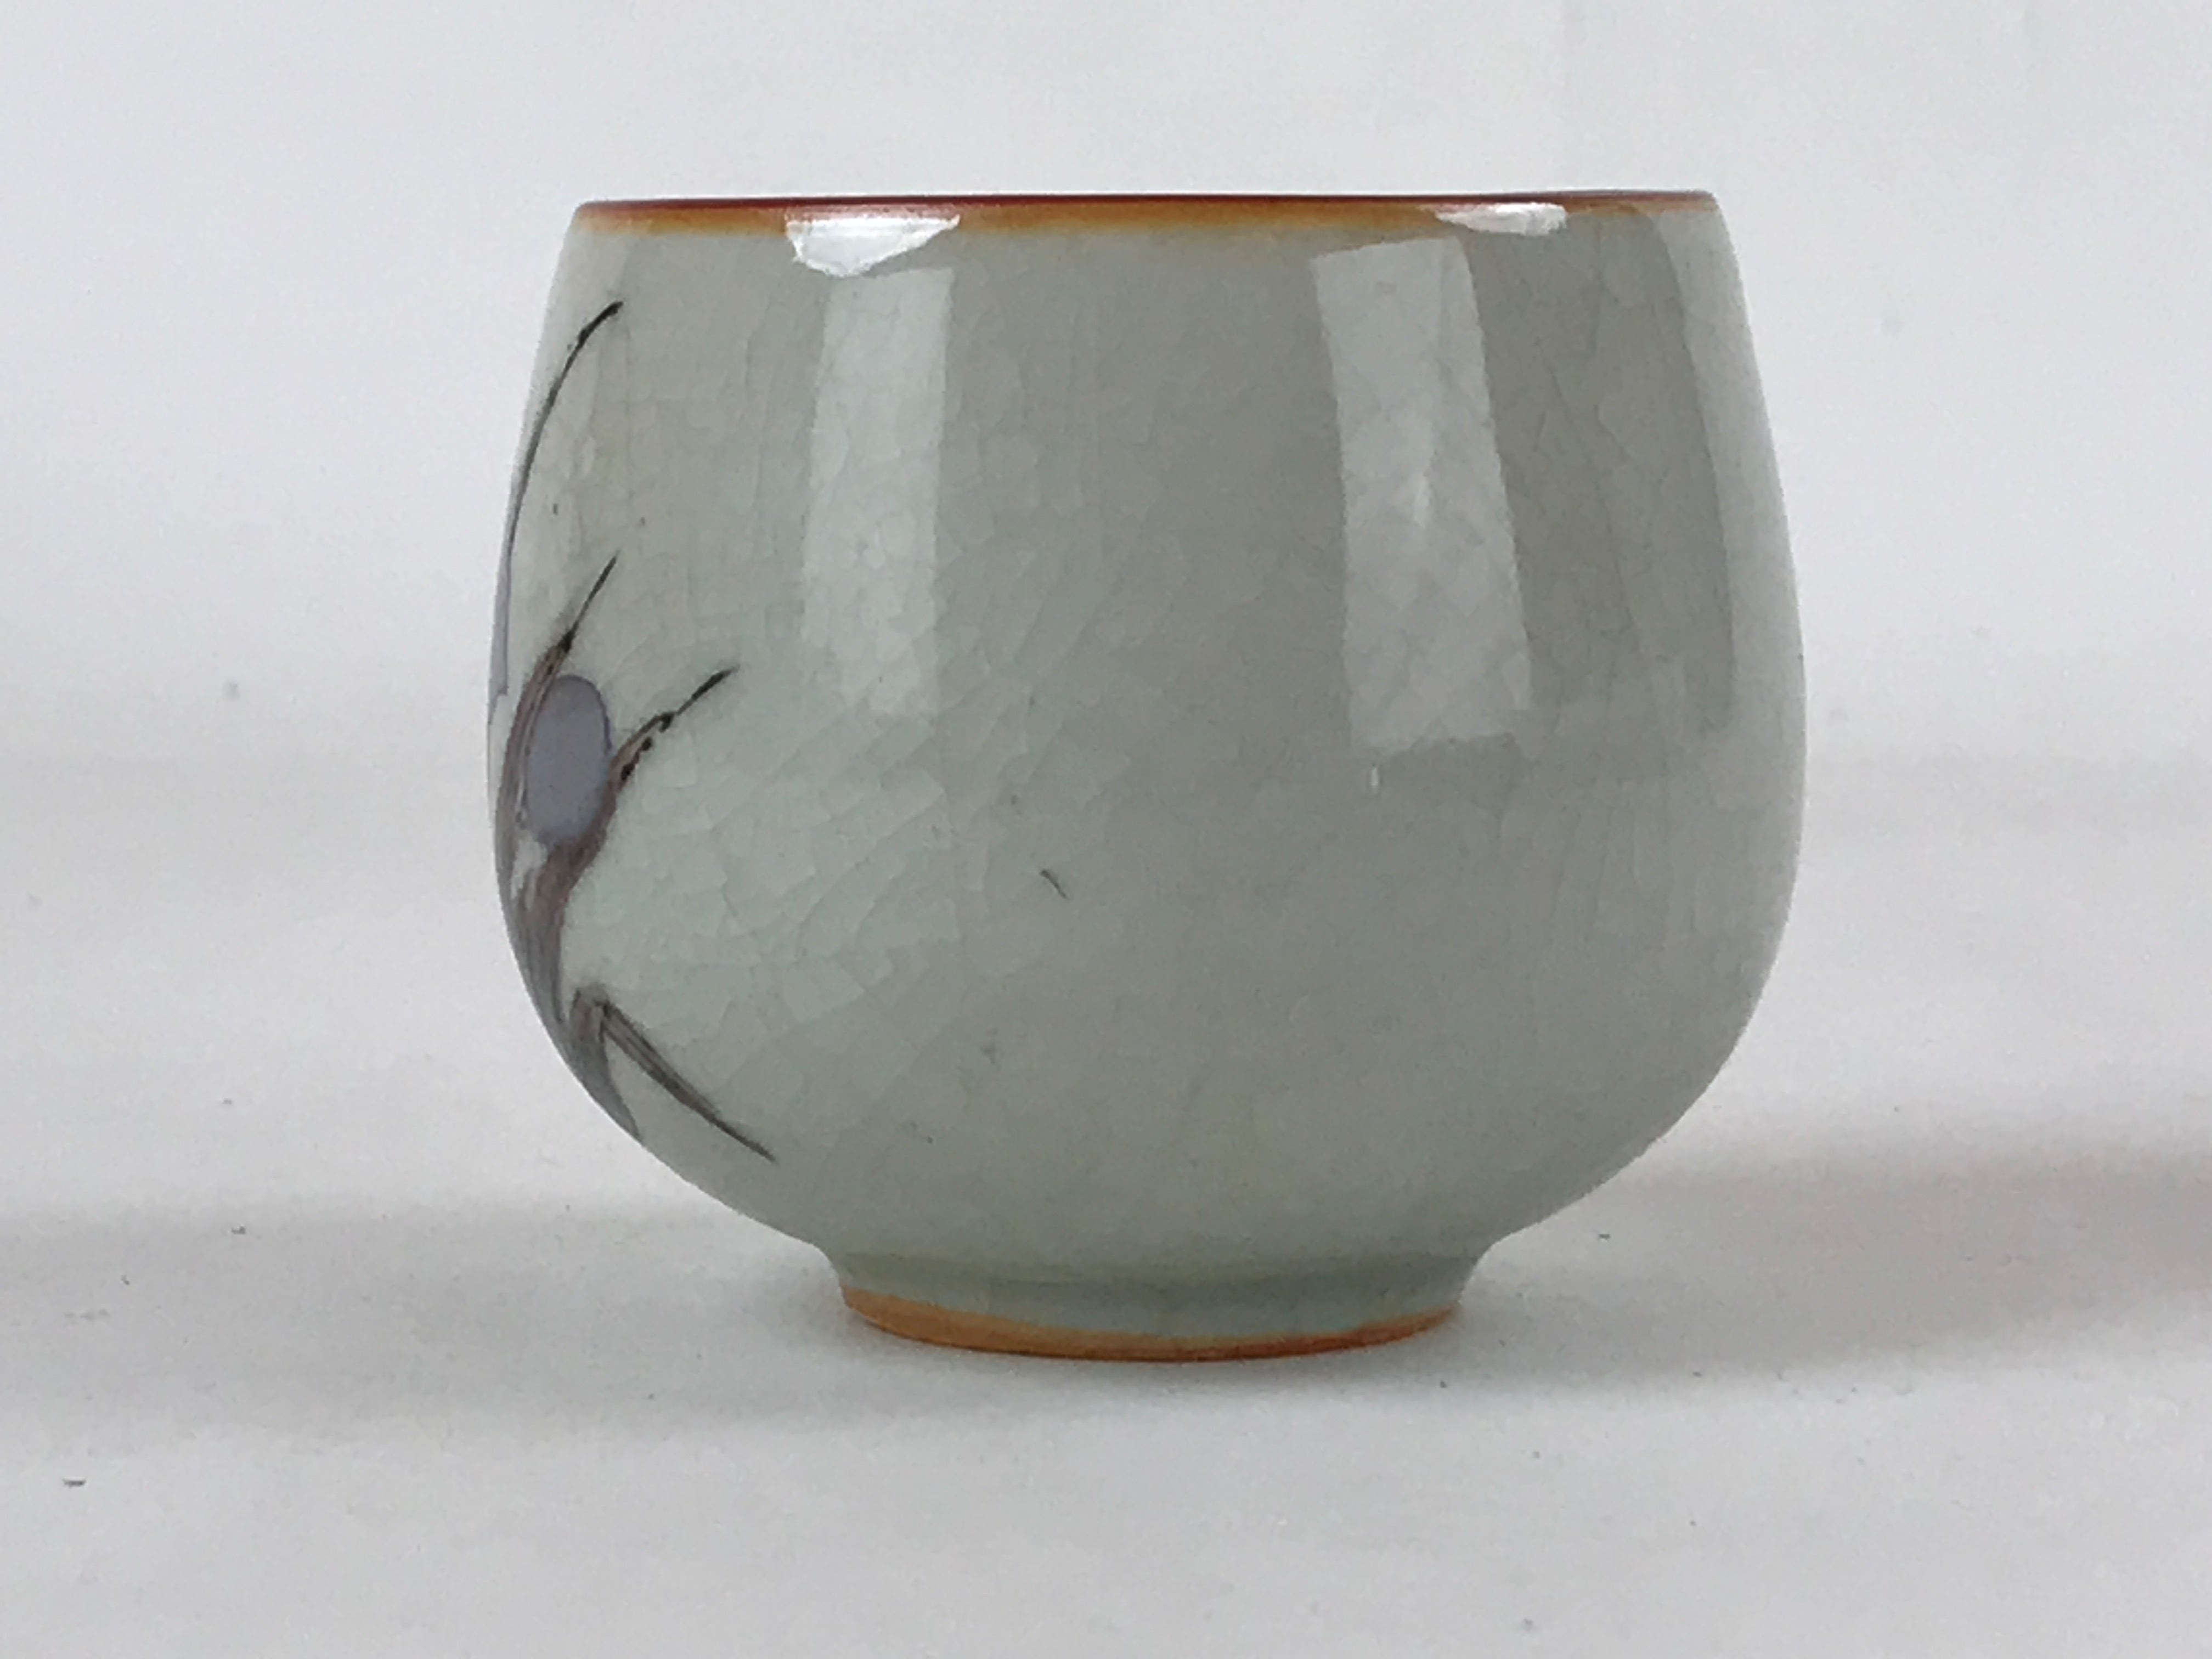 Japanese Ceramic Teacup Vtg Iris Flower Crackle Glaze White Yunomi Sencha TC405